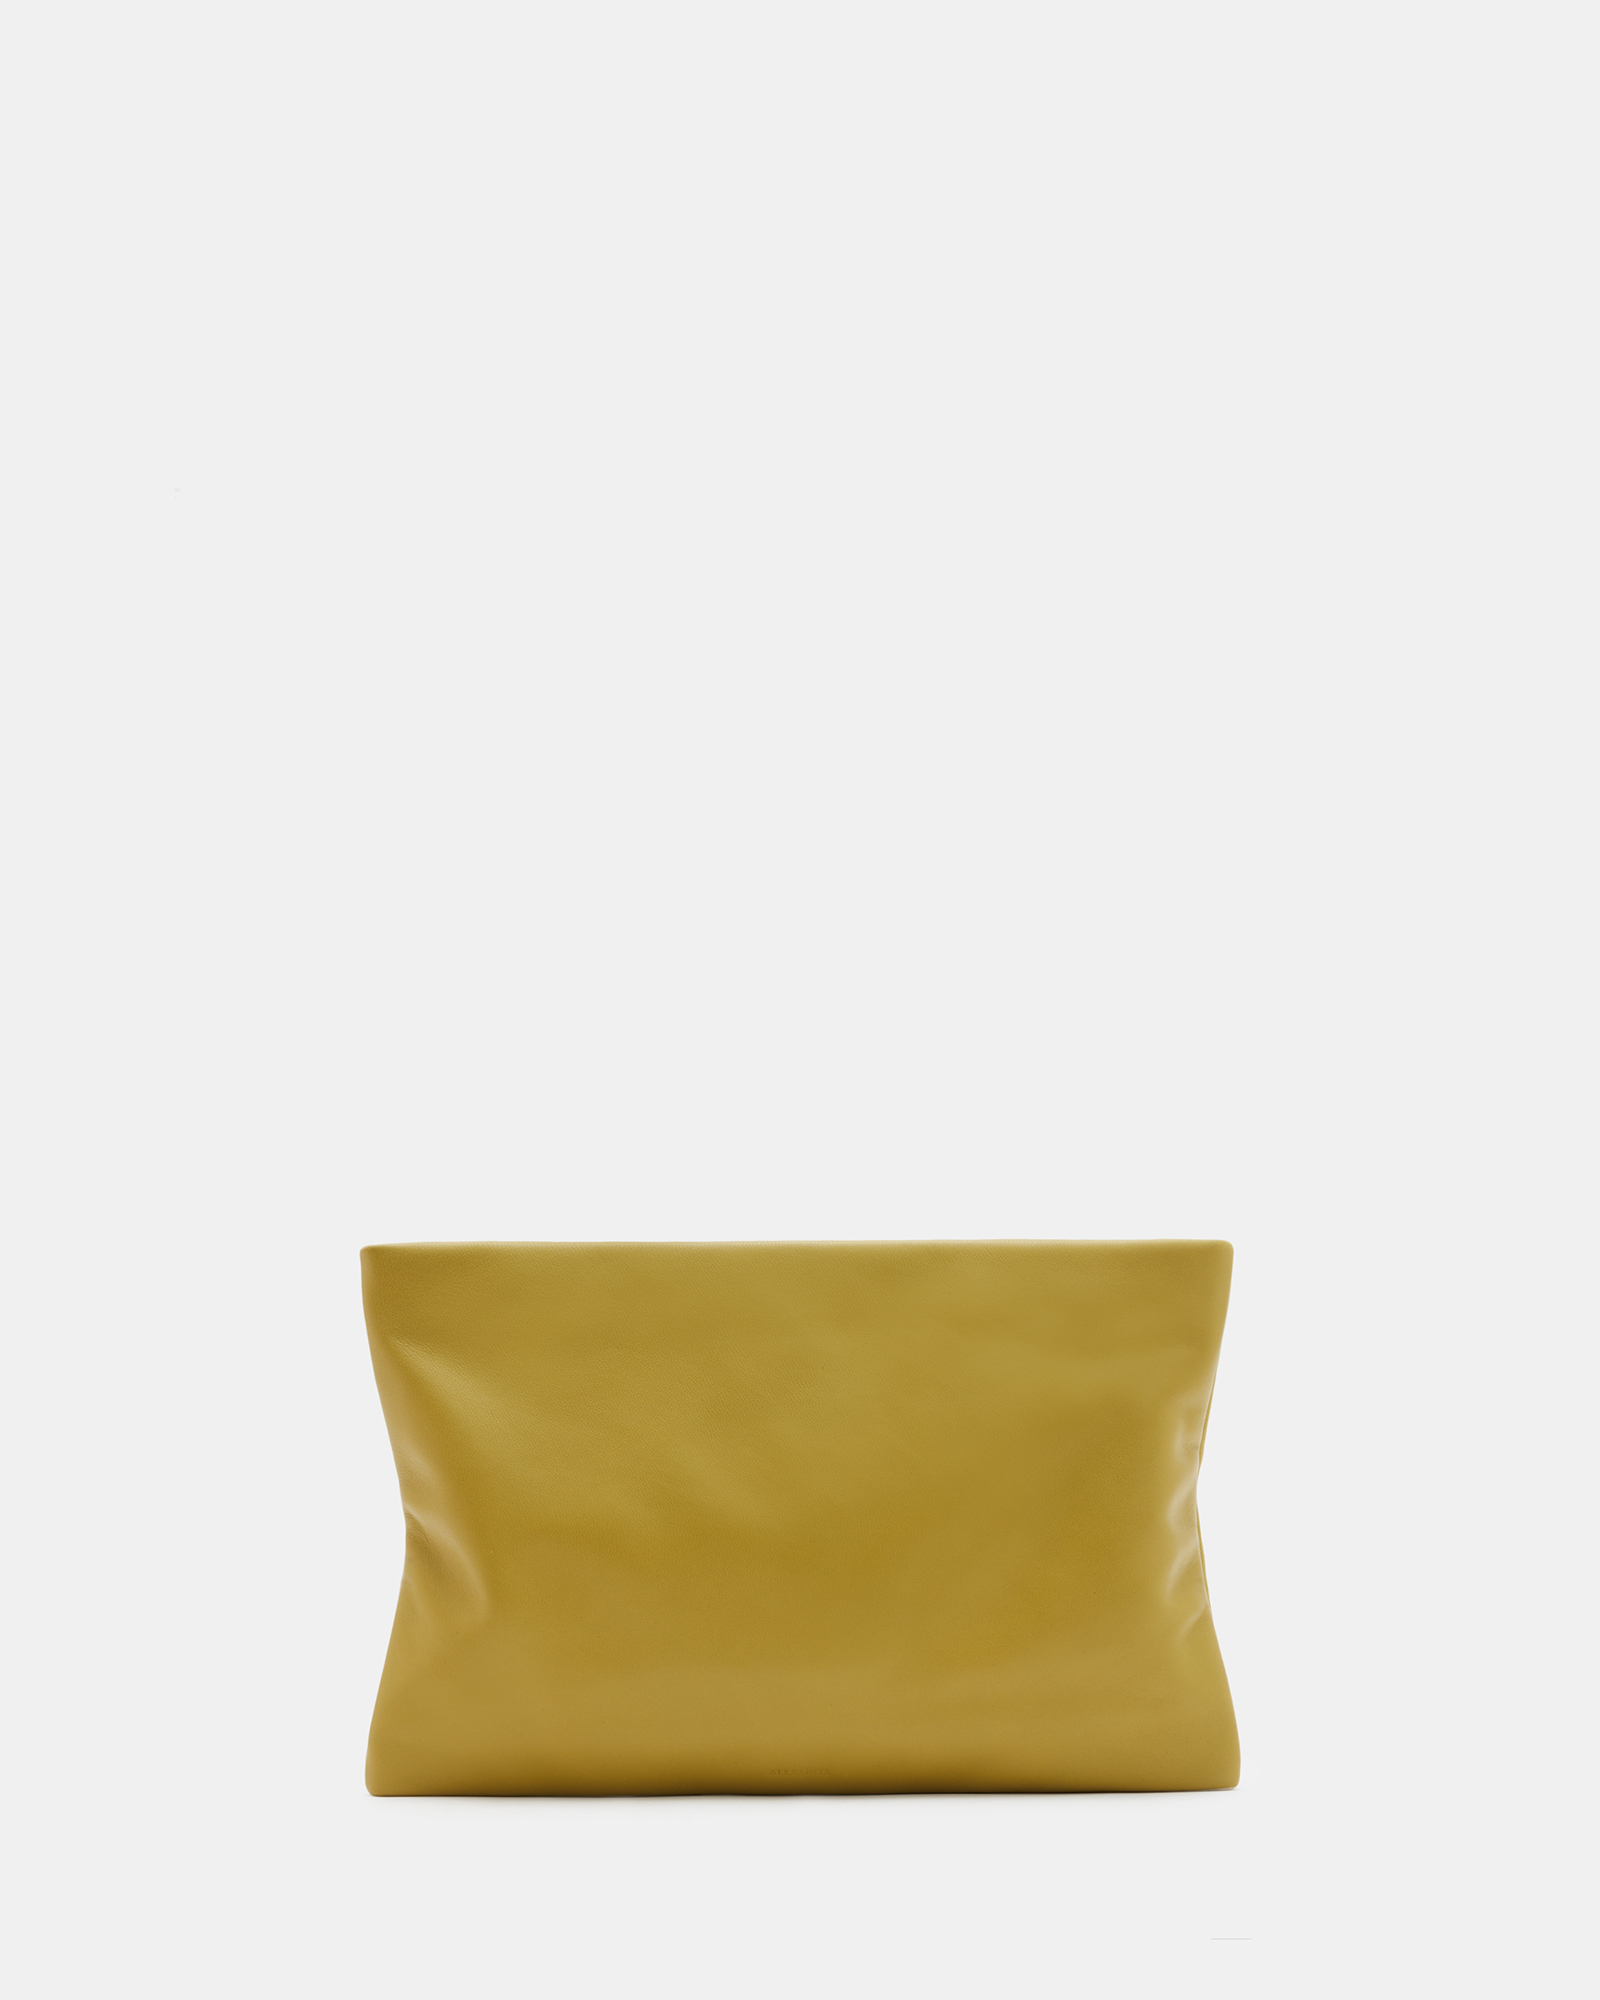 AllSaints Bettina Leather Clutch Bag,, SAP GREEN